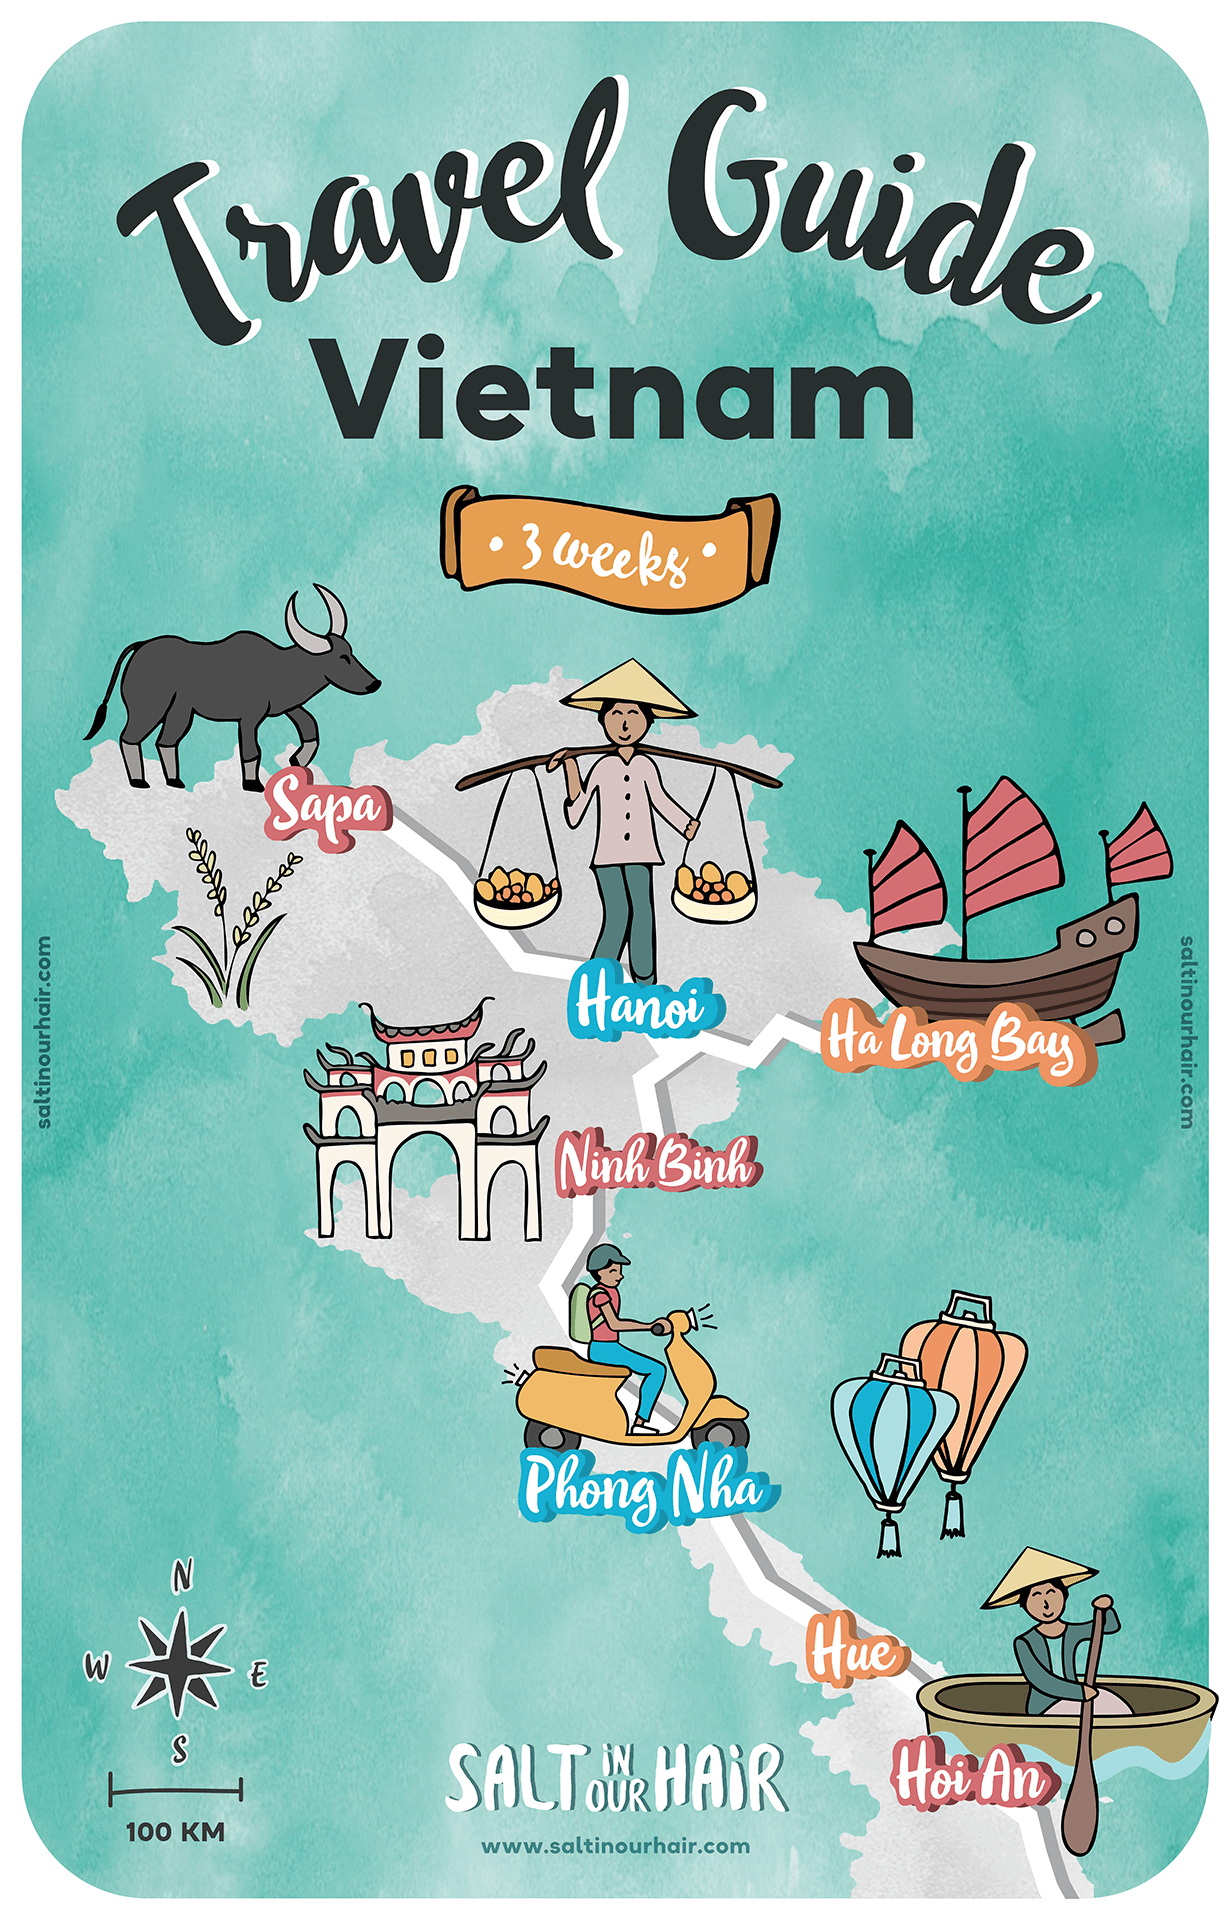 vietnam travel guide map